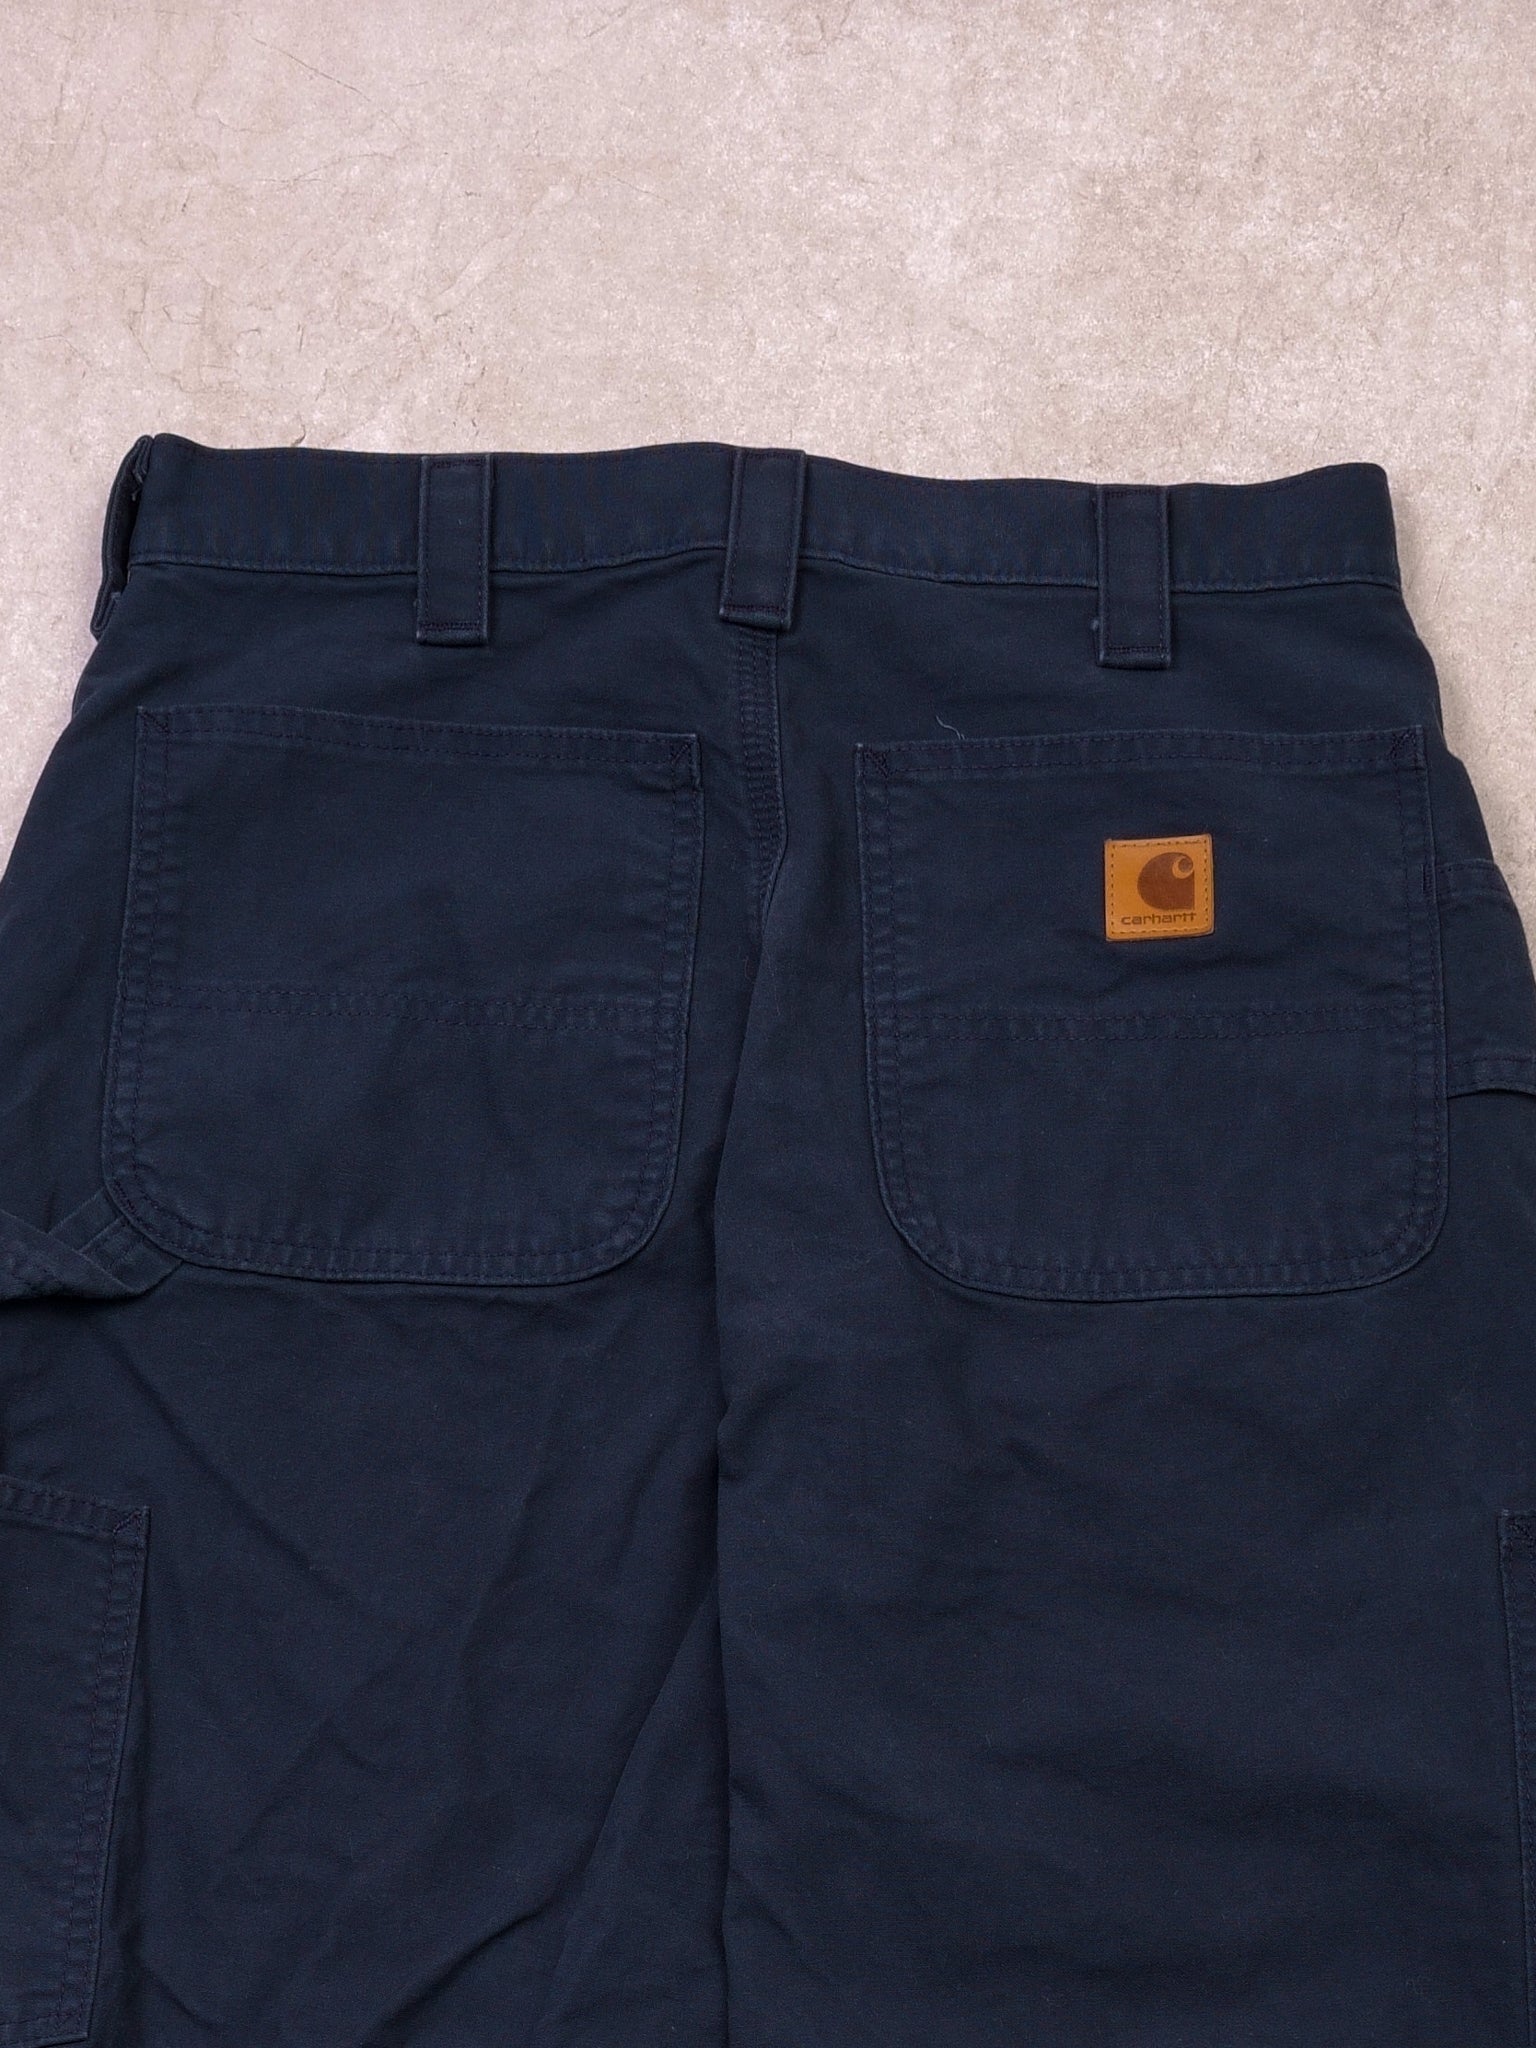 Vintage 90s Dark Blue Carhartt Loose Original Fit Carpenter Pants (30x30)